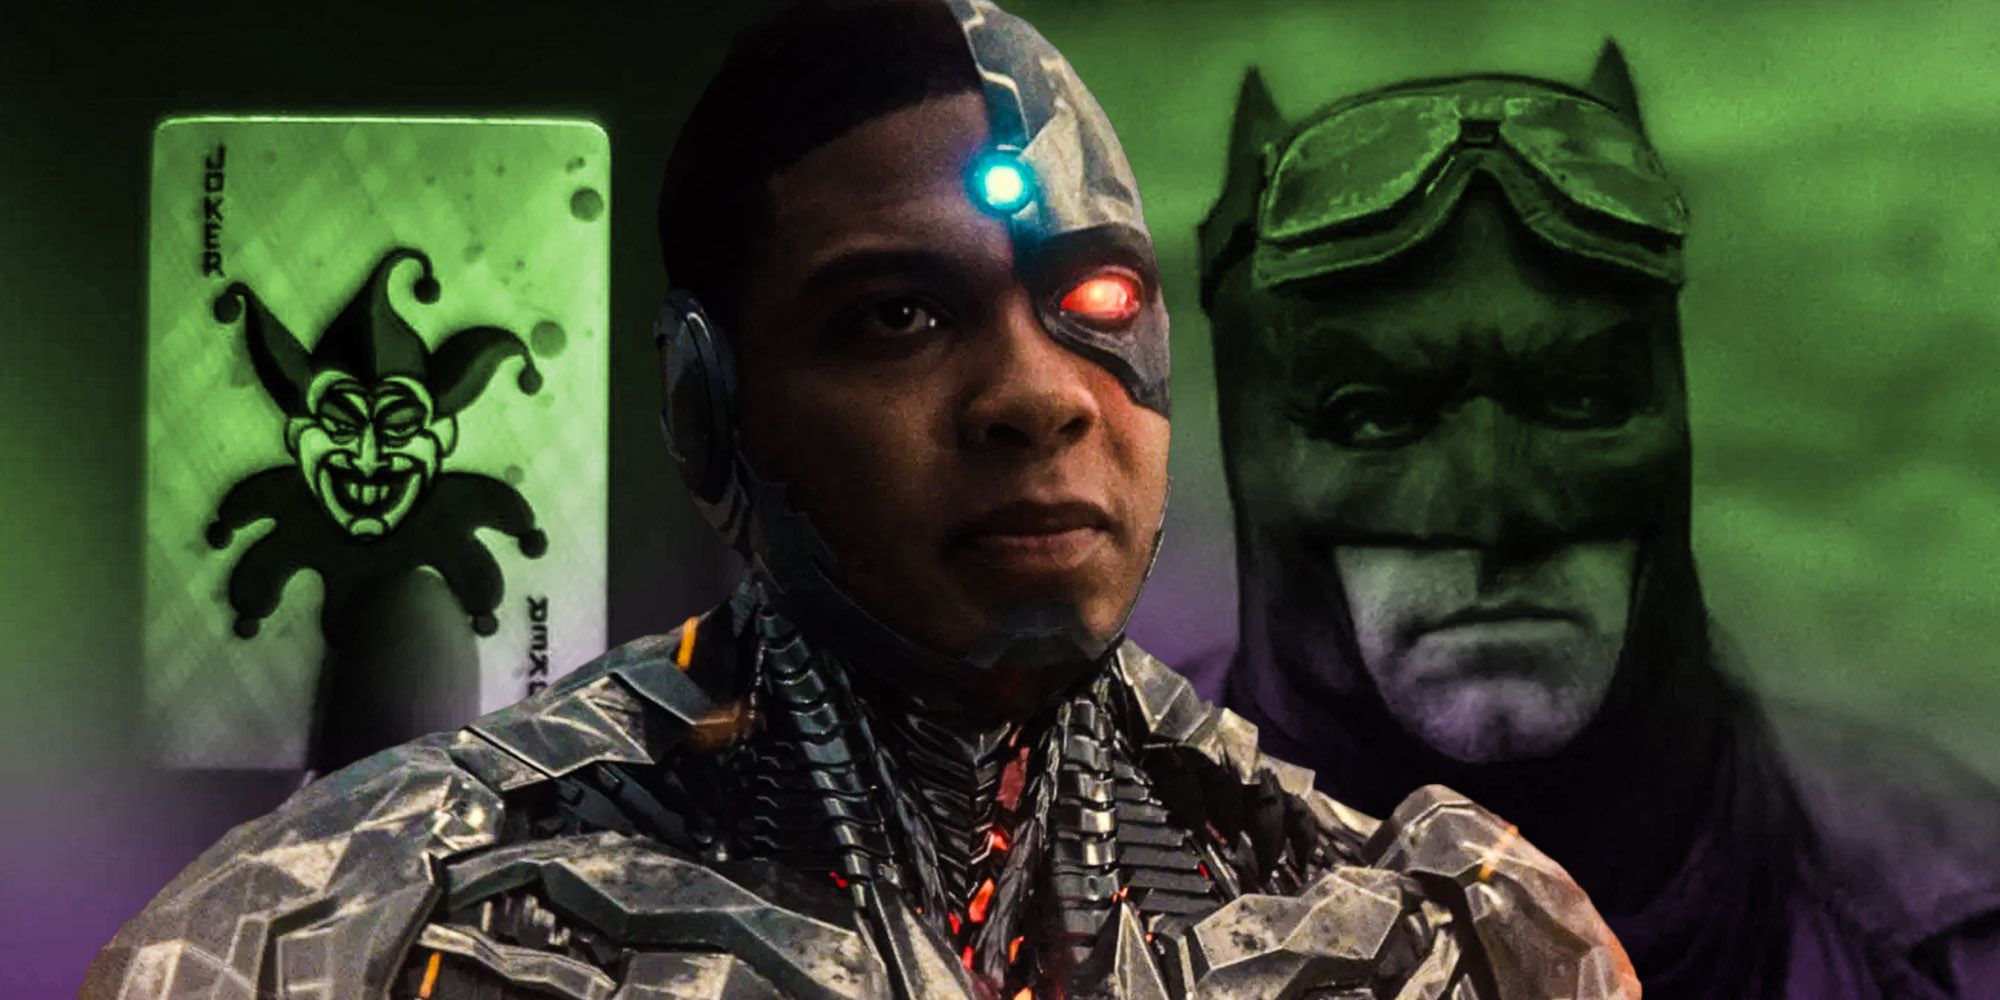 Cyborg vision batman and joker knightmare truce